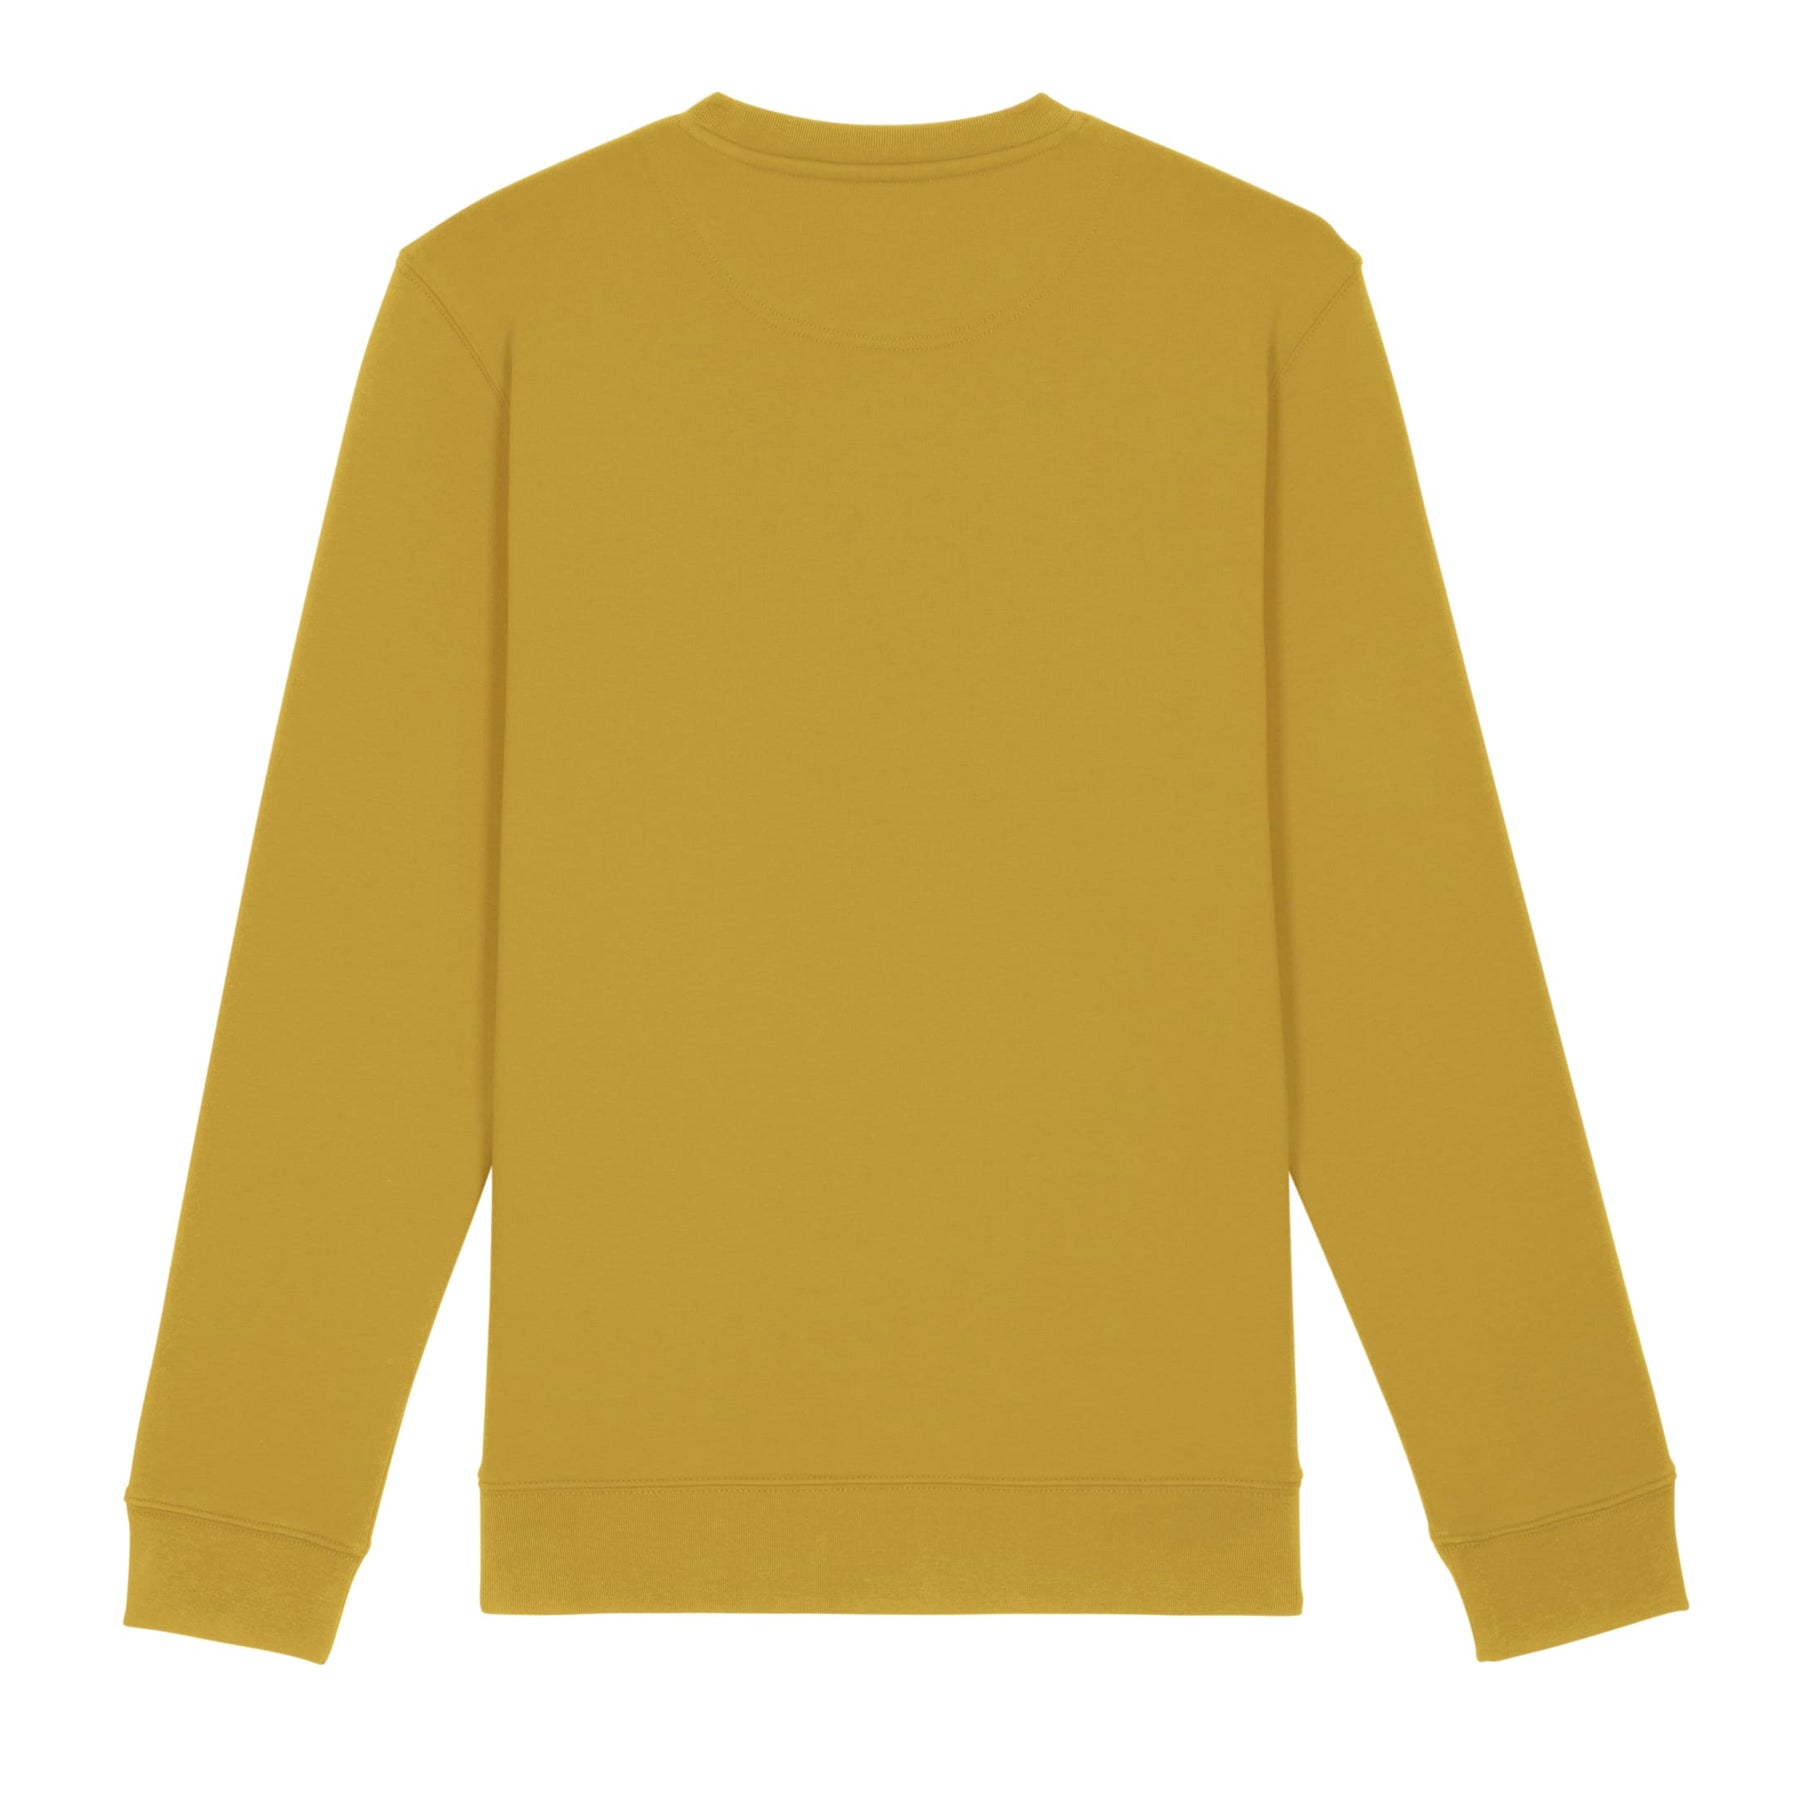 Mustard Sweatshirt. Boy